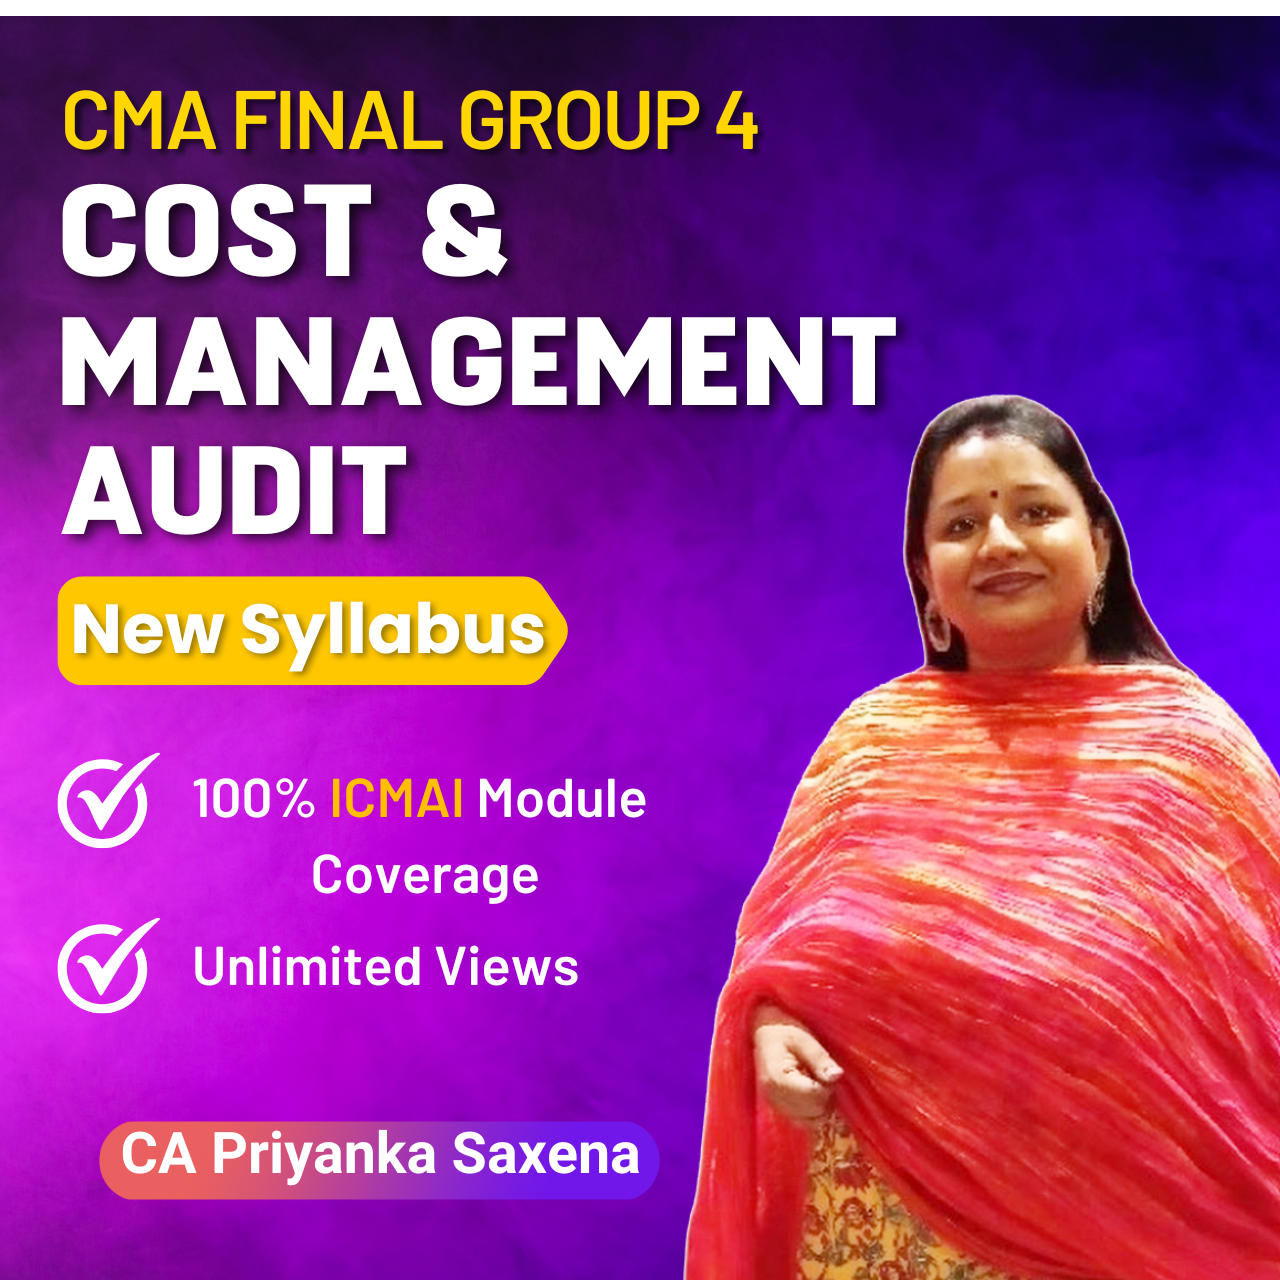 CMA Final Cost & Management Audit (Group 4) By CA Priyanka Saxena